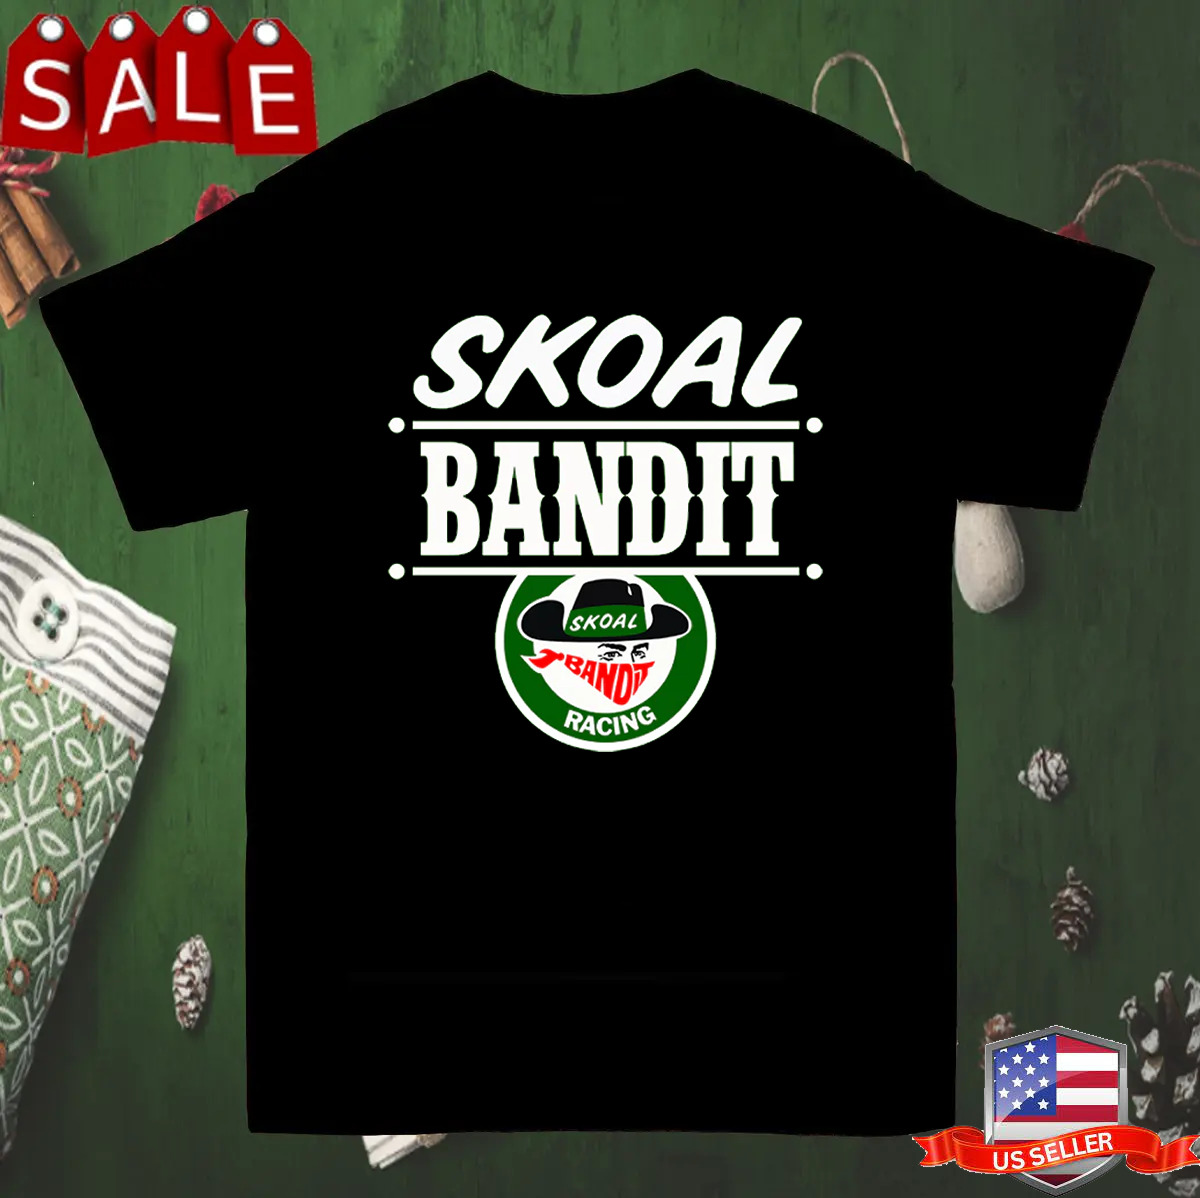 SKOAL BANDIT Racing V2 33 T Shirt Full Size S-5XL